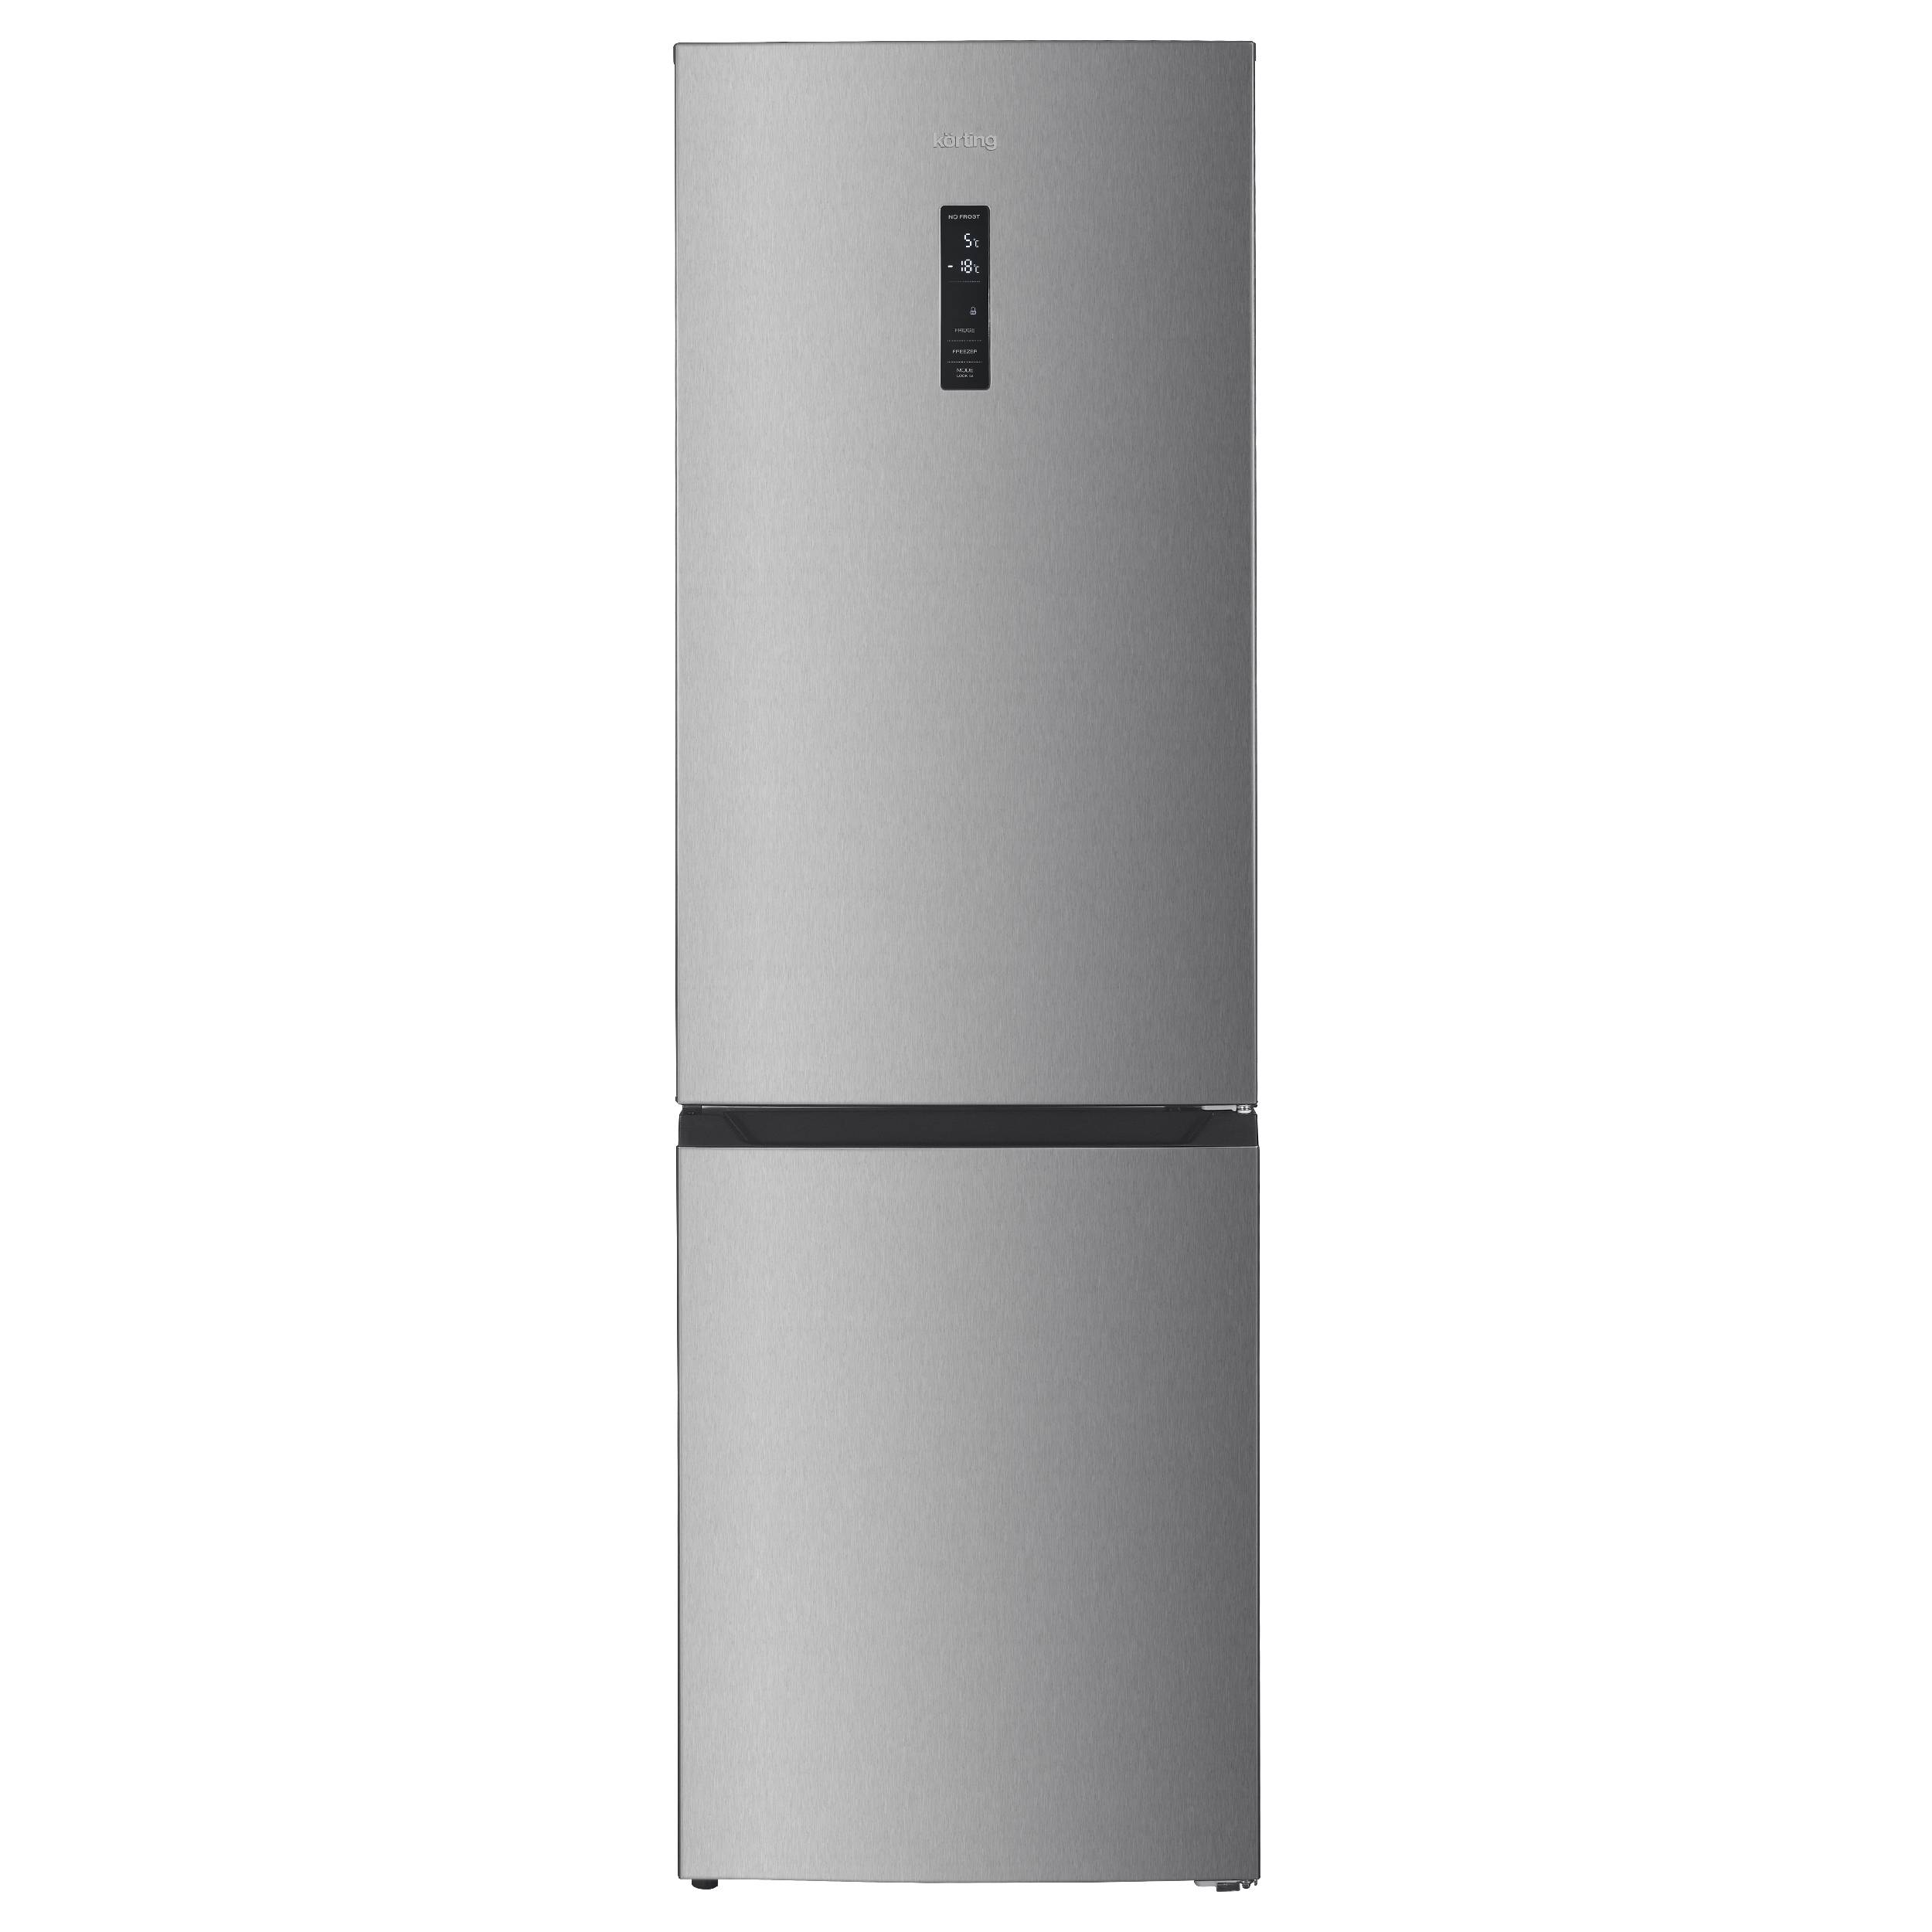 Холодильник Korting KNFC 62980 X серебристый, серый смарт часы checkme smart cmsi58sswb серебристый